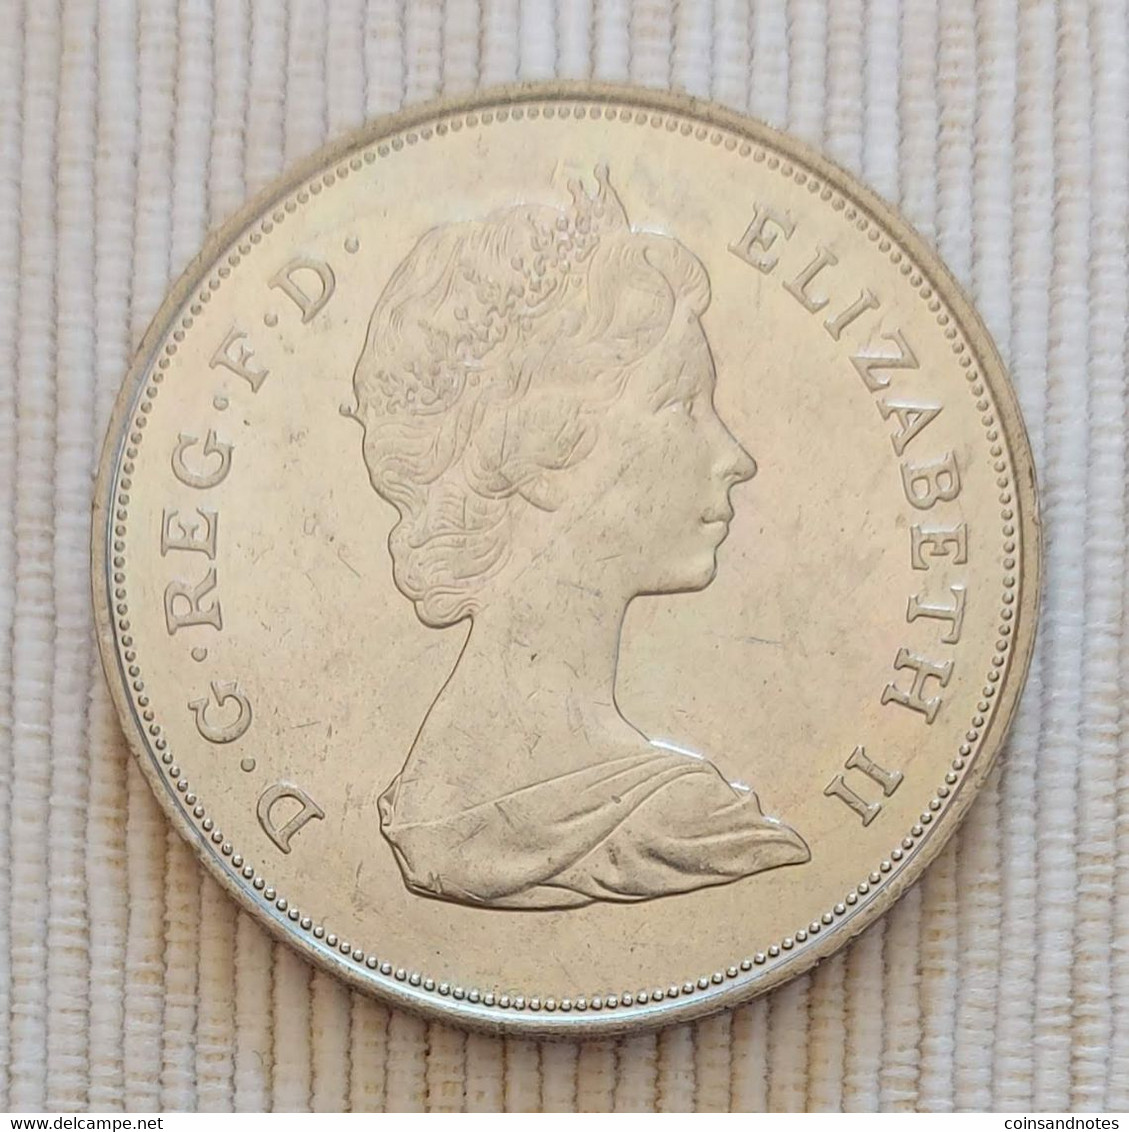 UK 1981 - Royal Wedding Charles & Diana - 25 Pence - Elizabeth II - KM# 925 - 25 New Pence